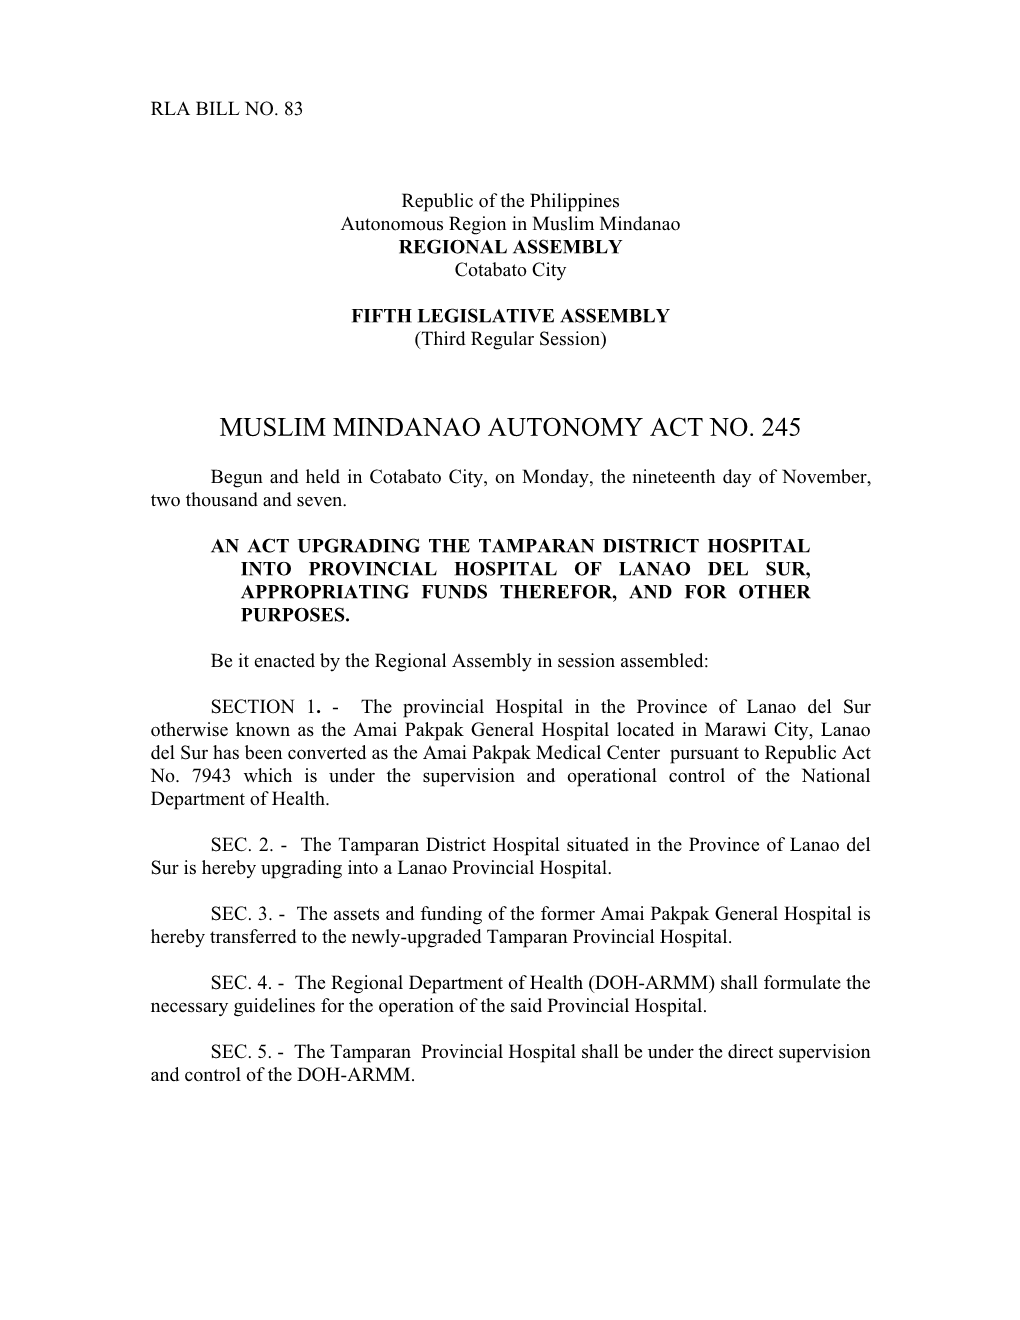 Muslim Mindanao Autonomy Act No. 245